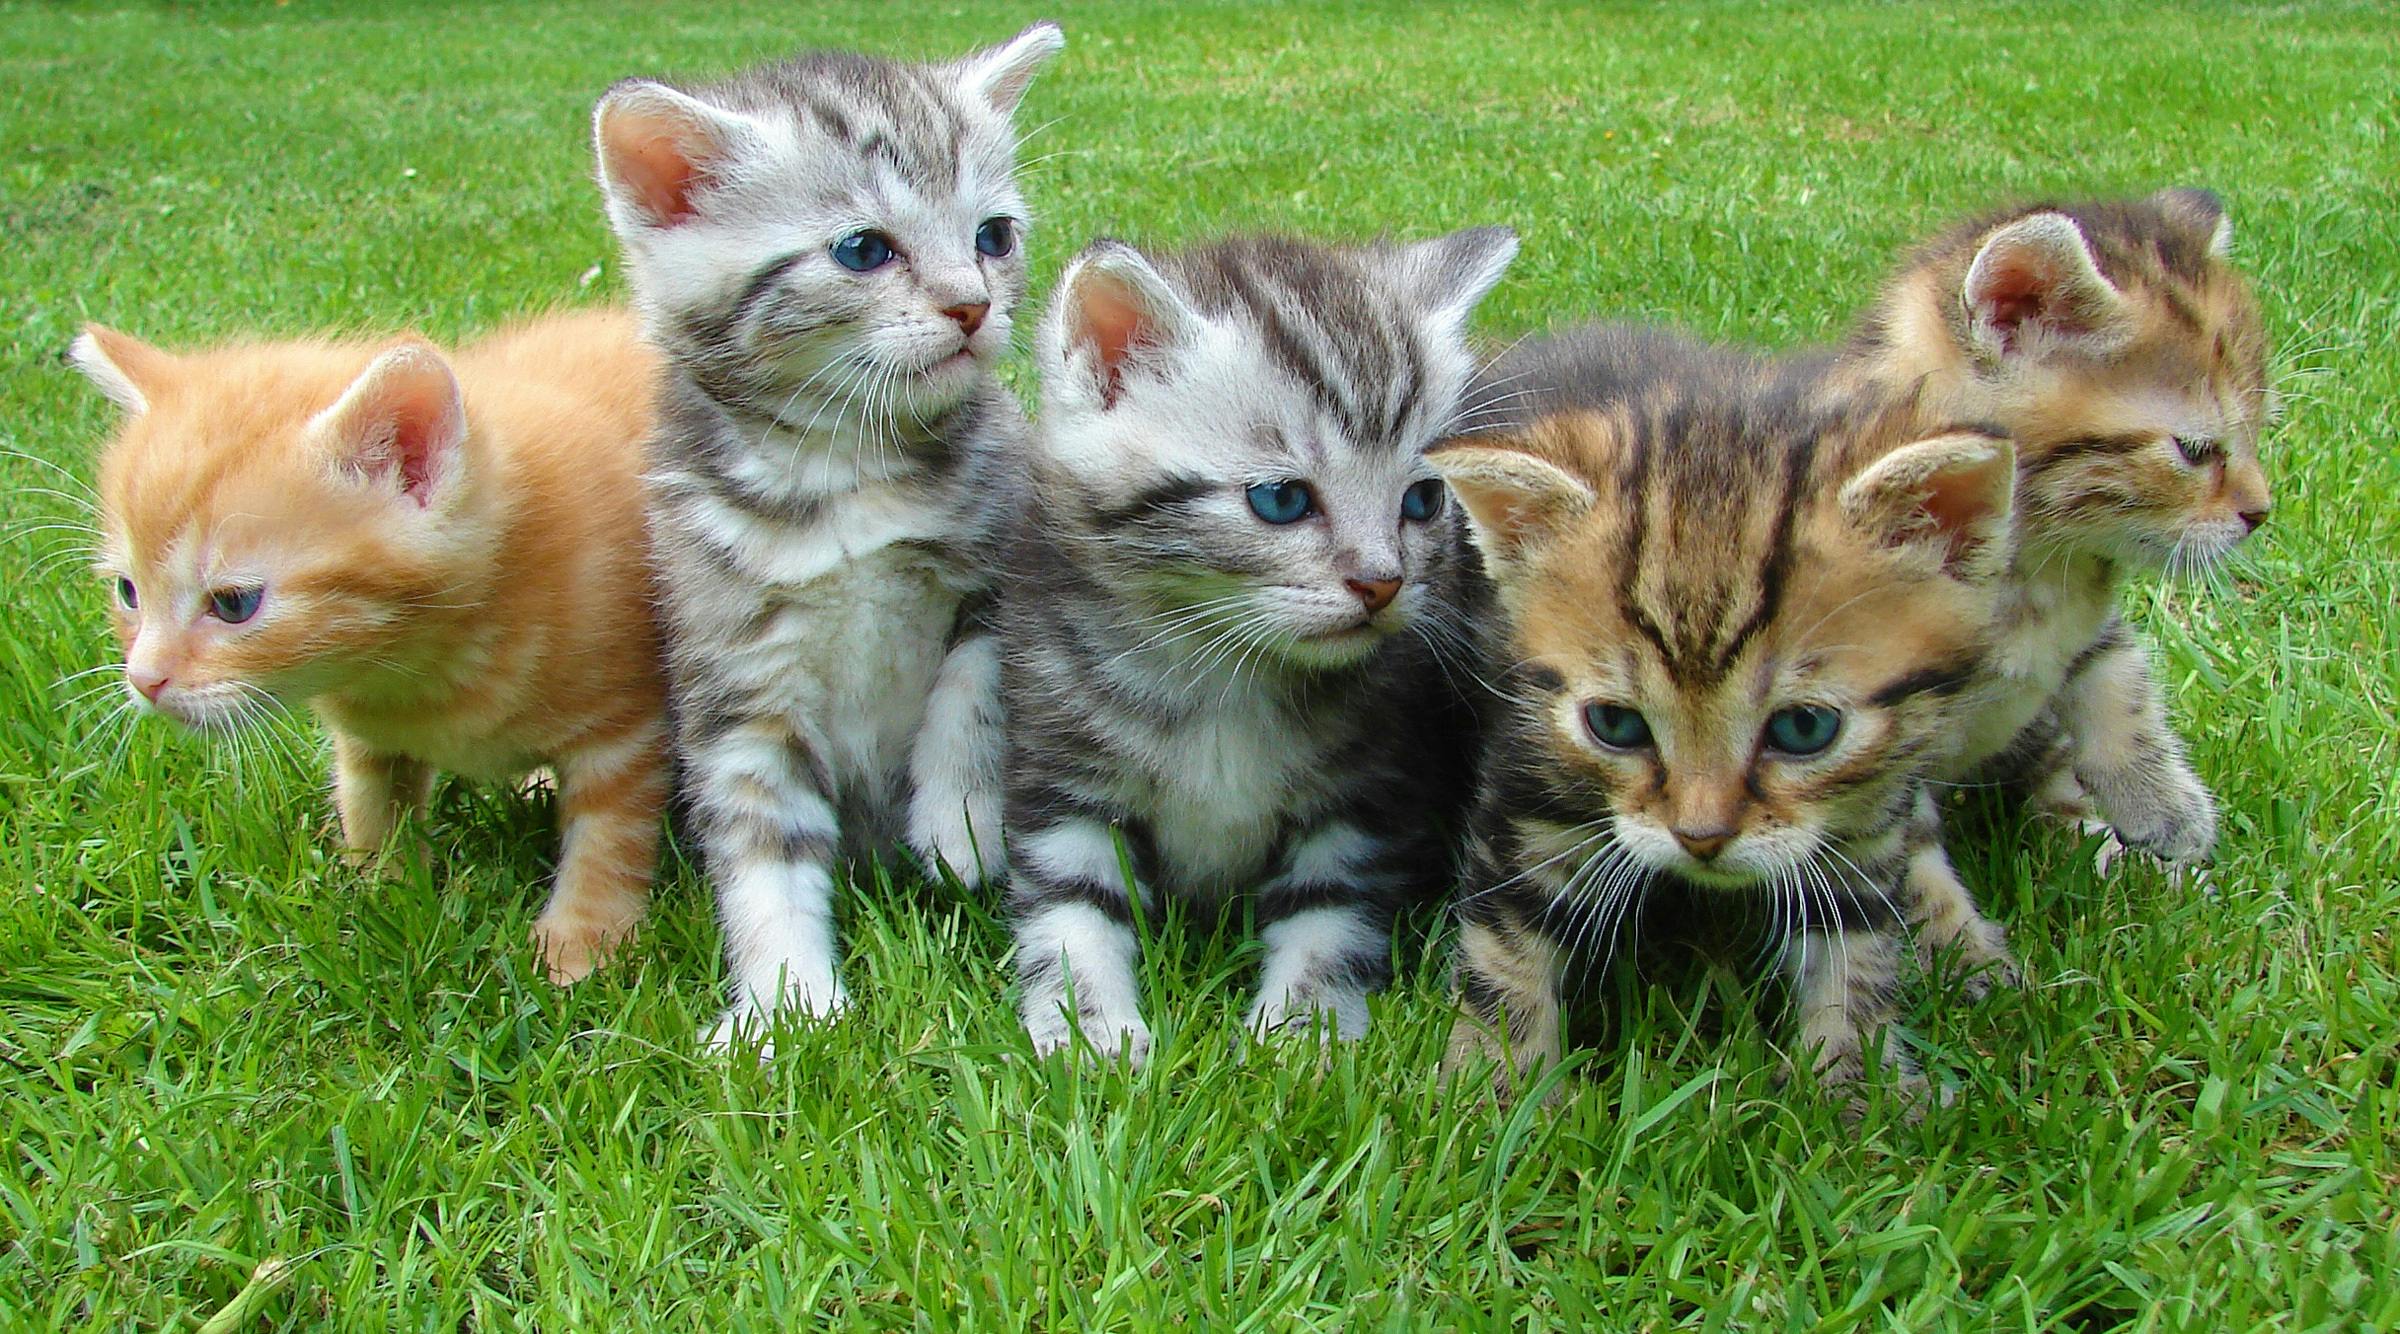 Group of Kittens